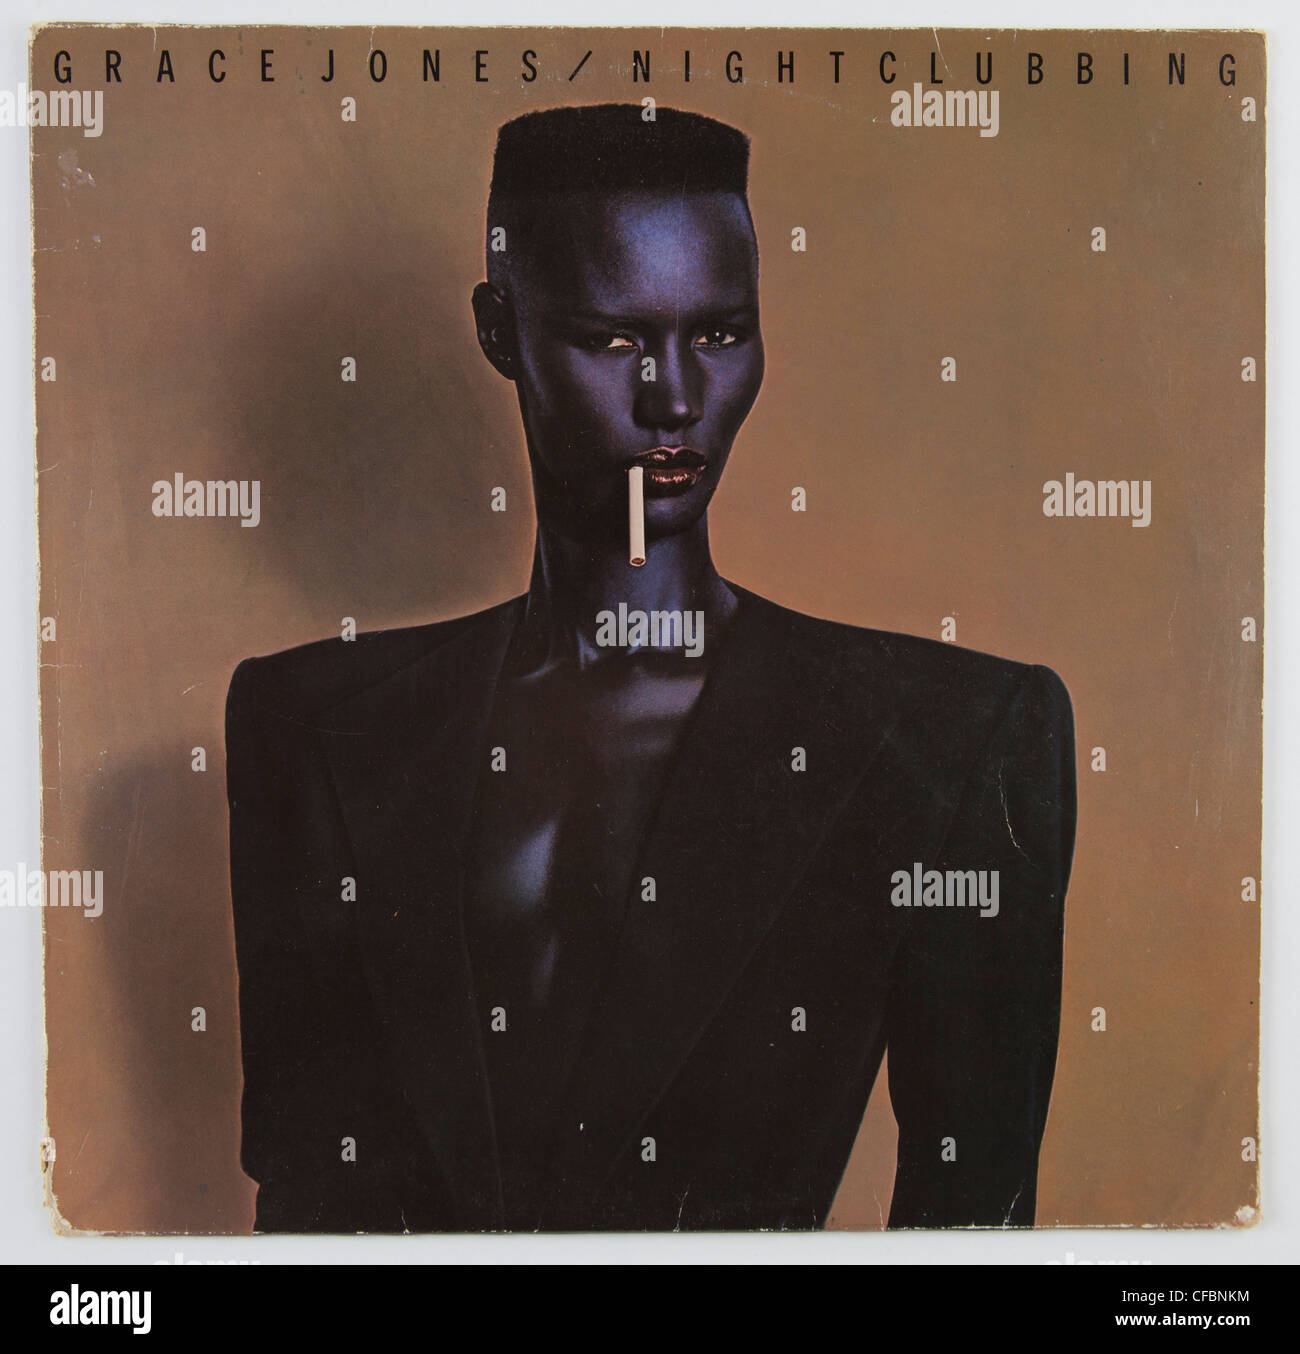 Grace Jones, Nightclubbing-Album-cover Stockfoto